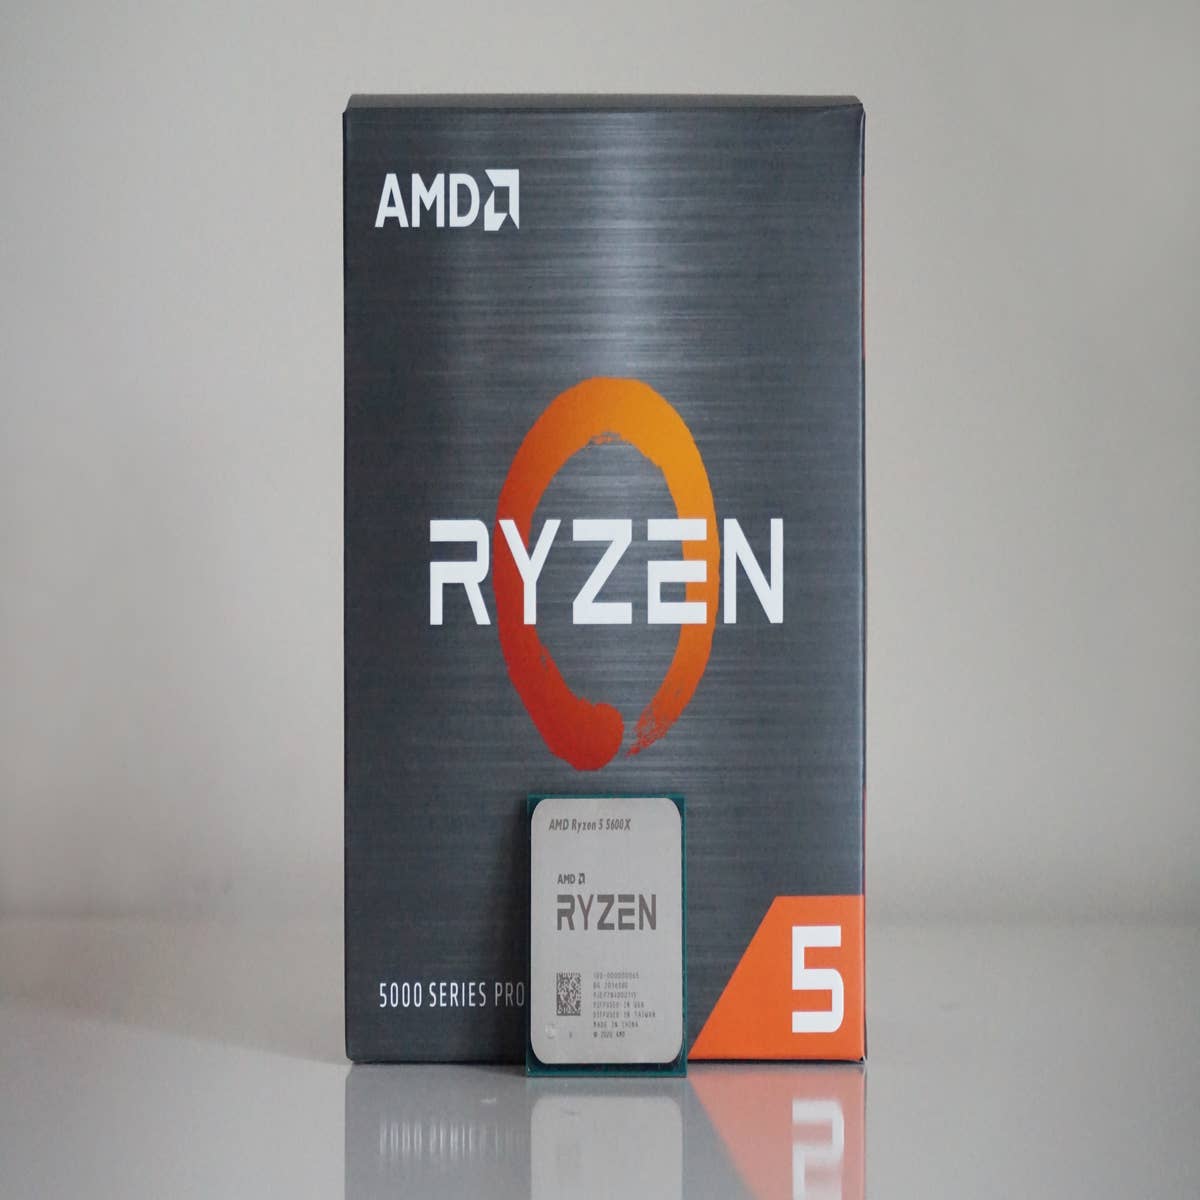 AMD Ryzen 5 5600X Processor 6-core 12 Threads up to 4.6 GHz AM4